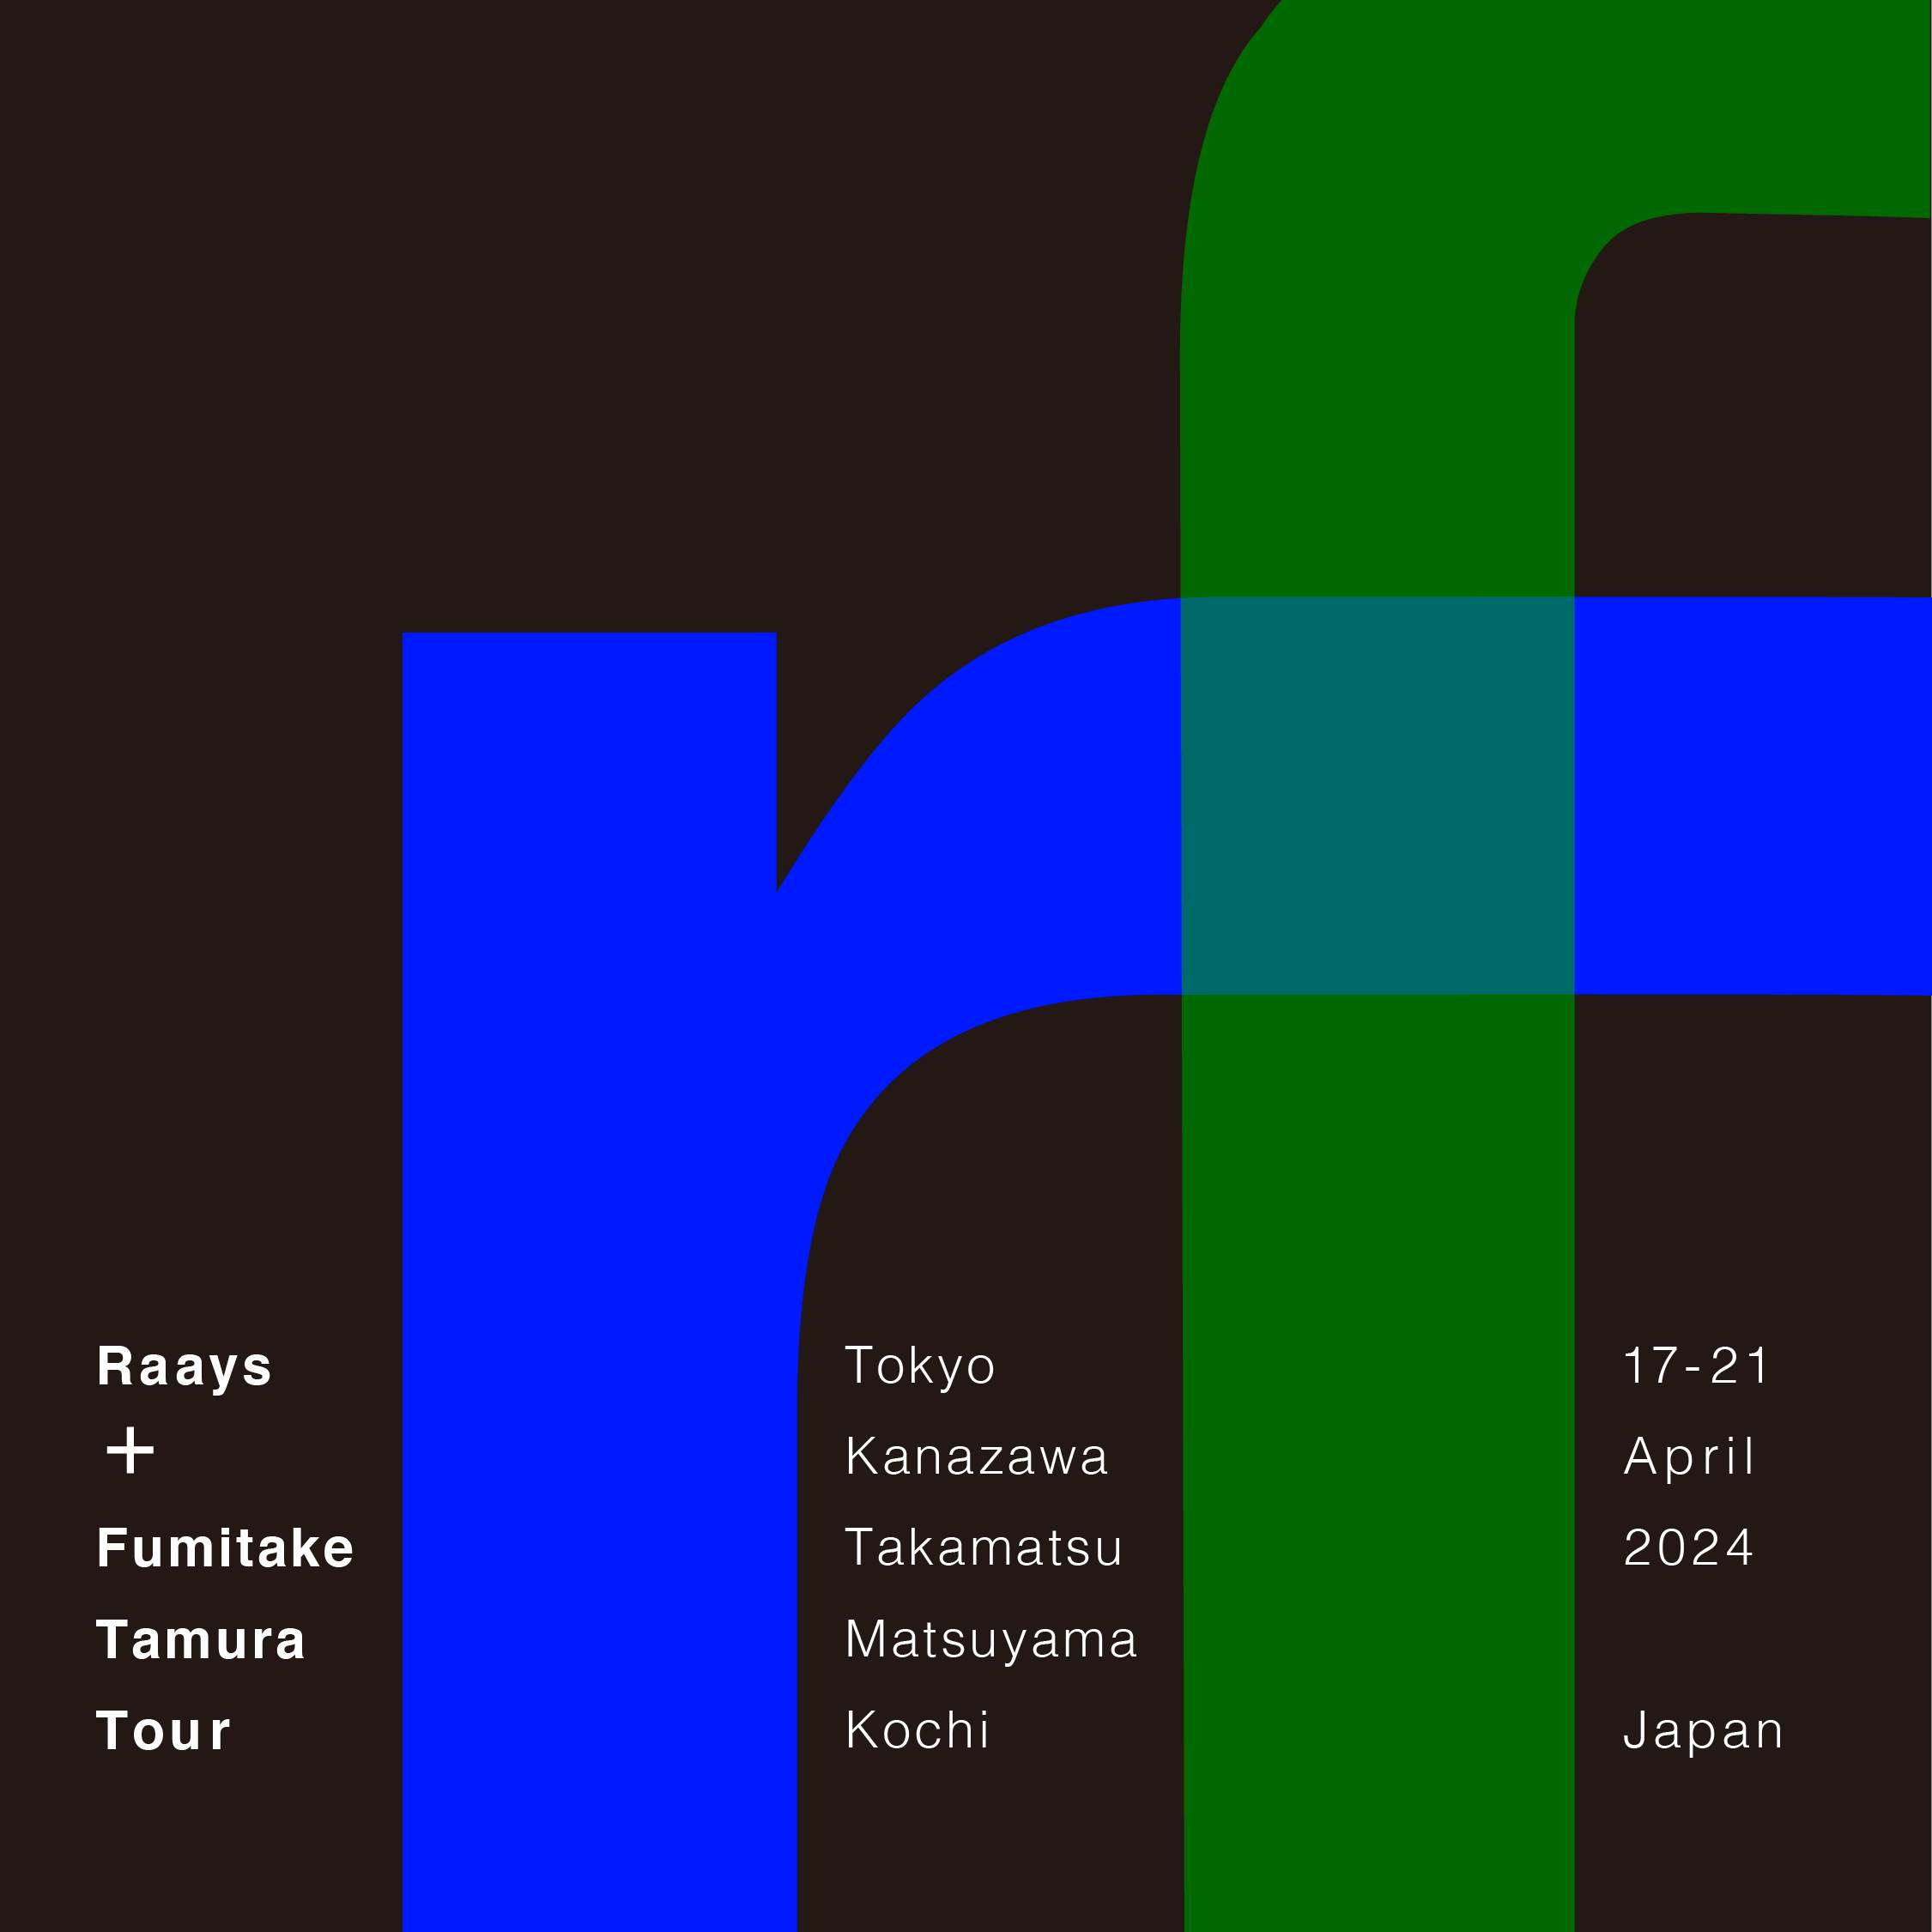 Raays + Fumitake Tamura Tour in Kanazawa at Undercover Session 